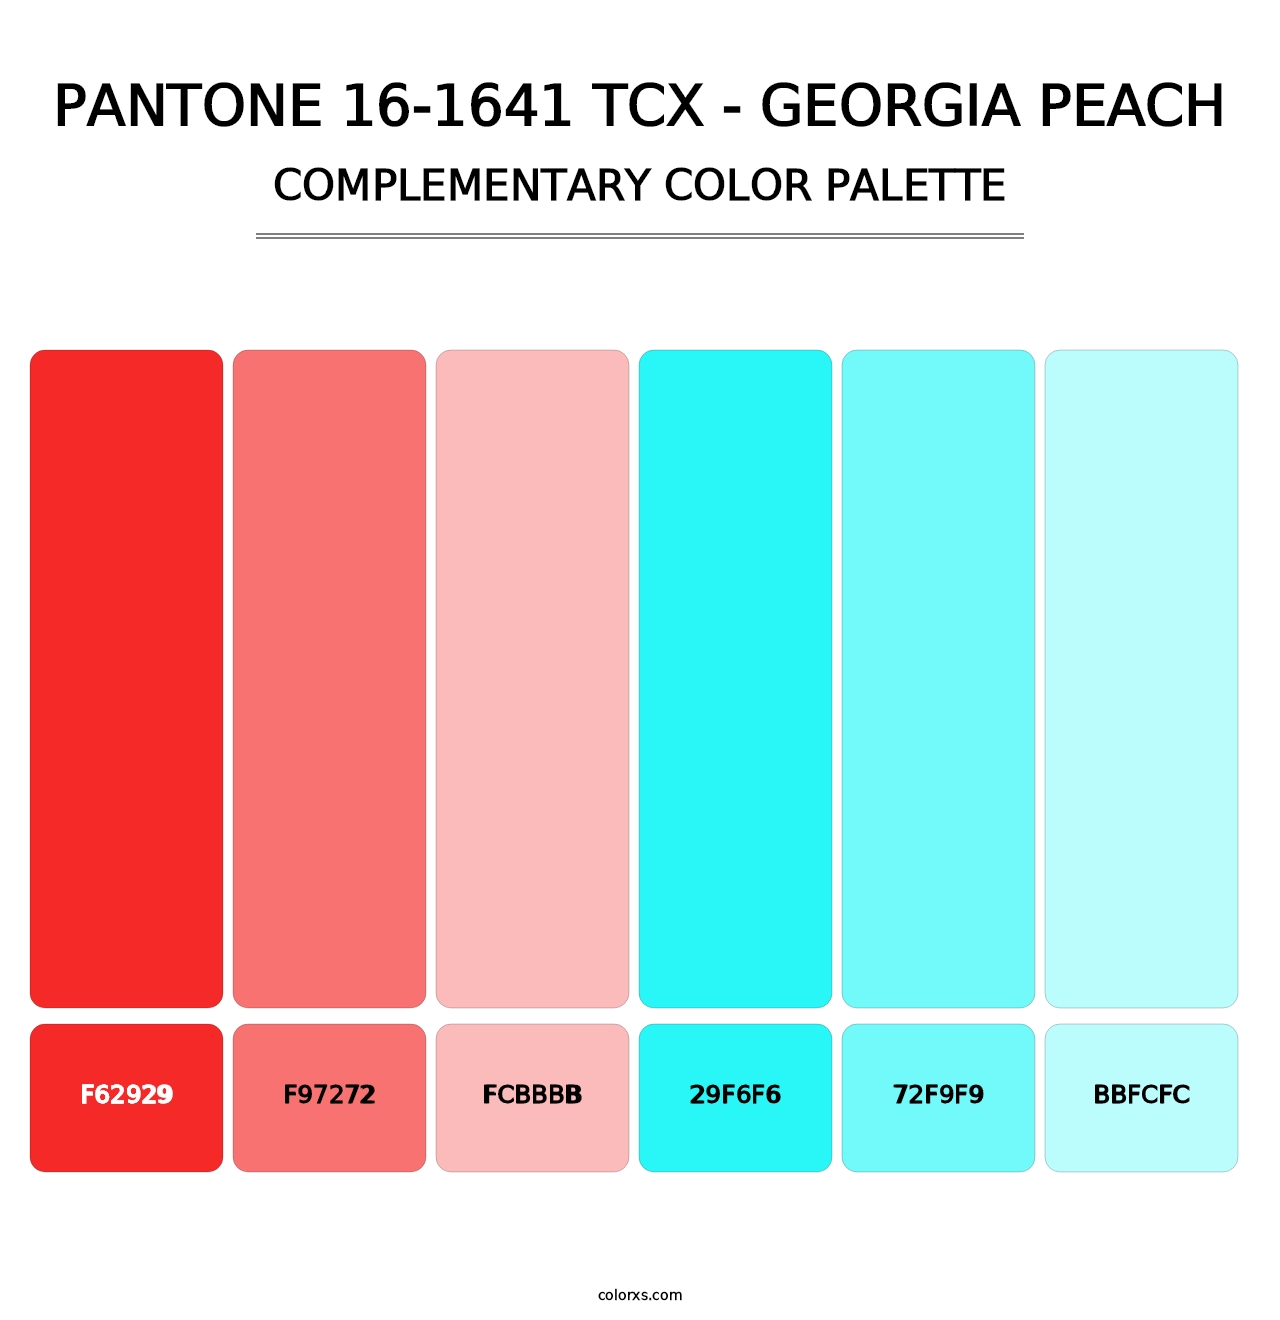 PANTONE 16-1641 TCX - Georgia Peach - Complementary Color Palette